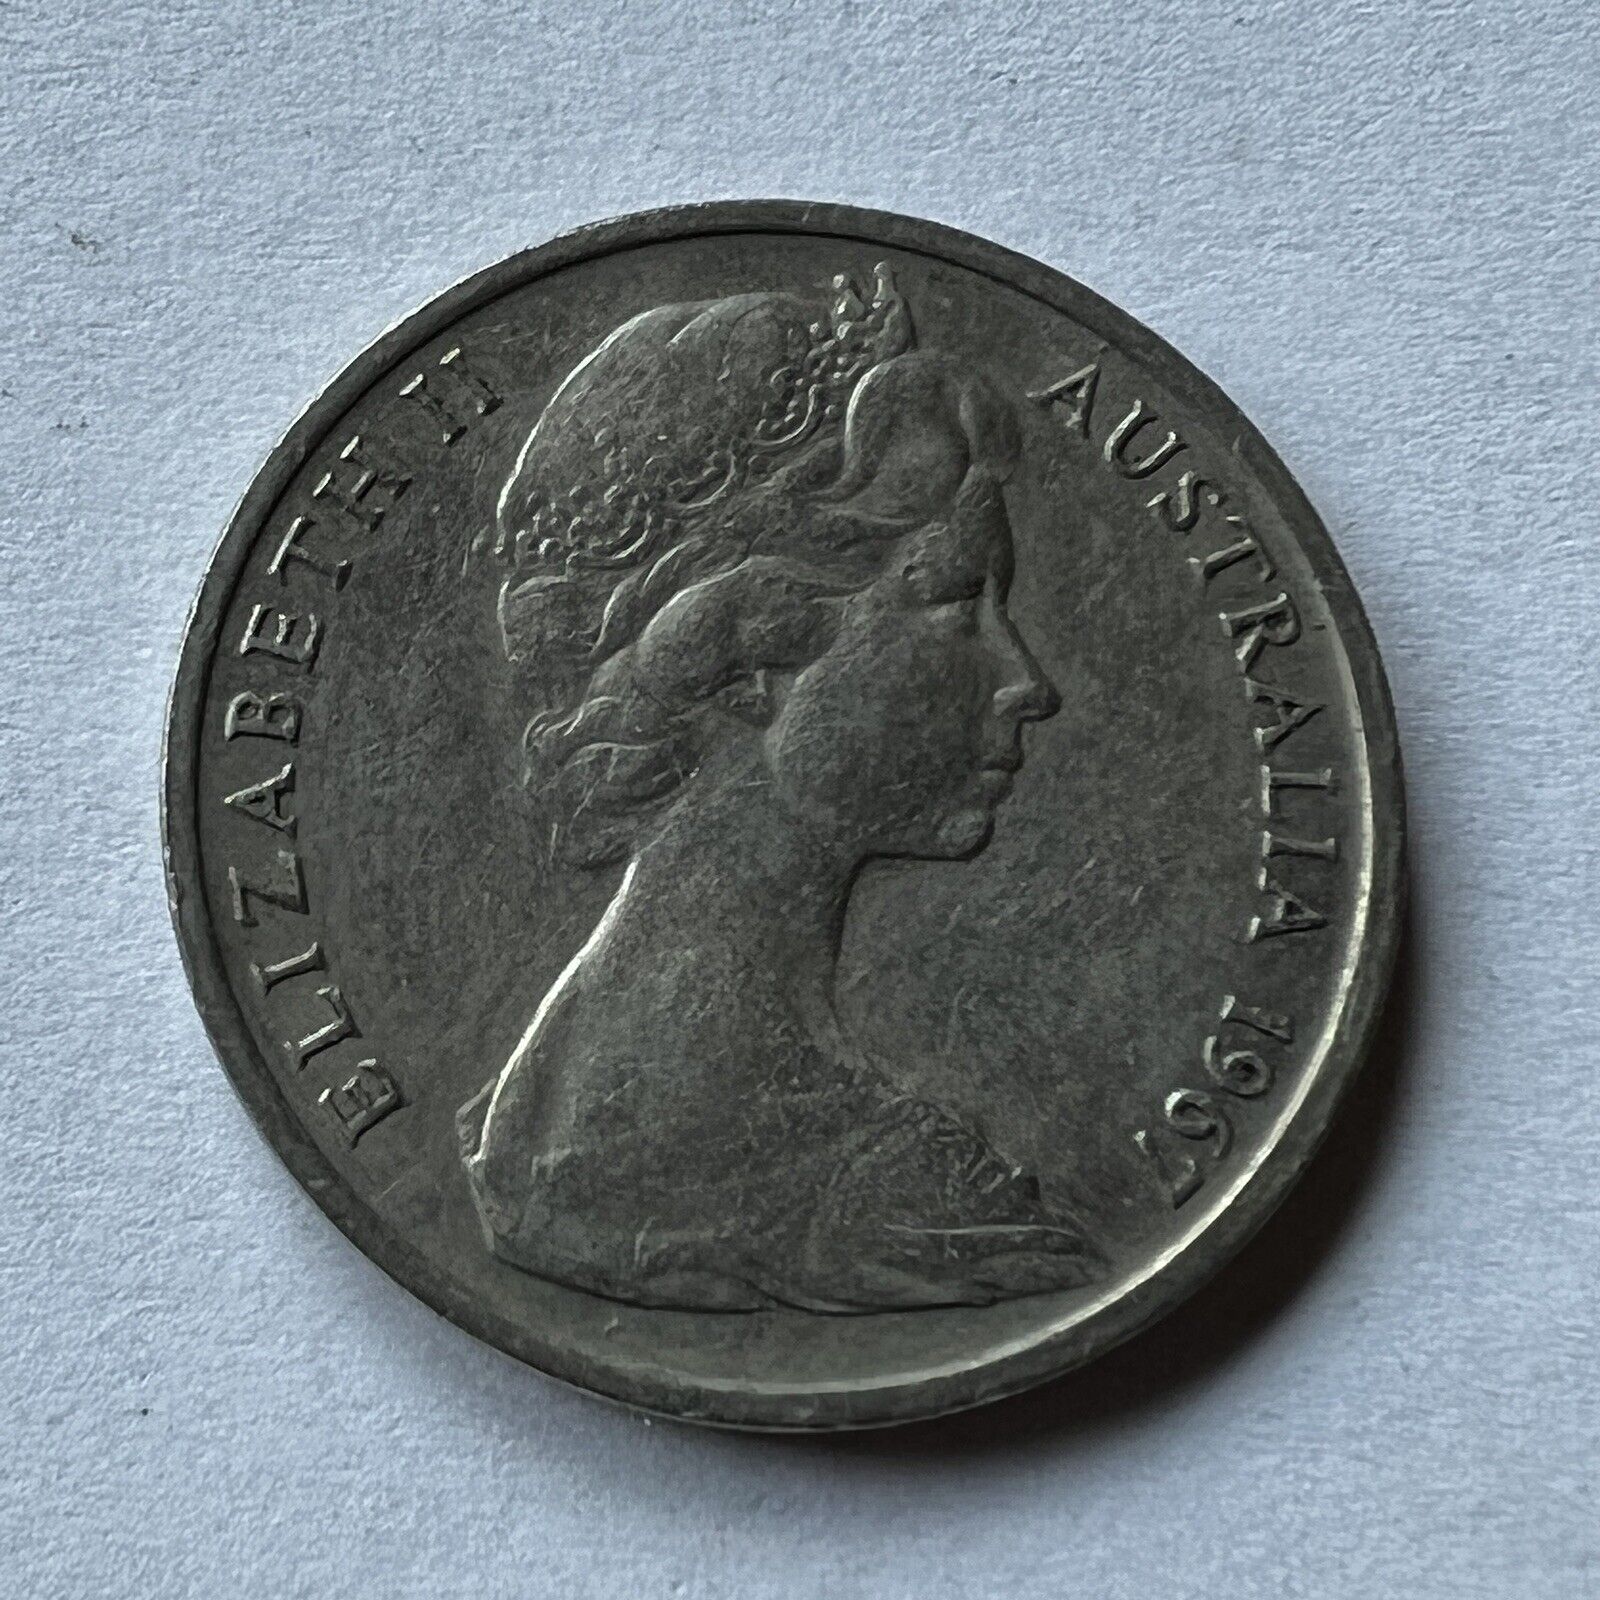 QUEEN ELIZABETH II 1967 AUSTRALIA 10 CENT COIN SILVER COLOR QEII QE2 COLLECTABLE